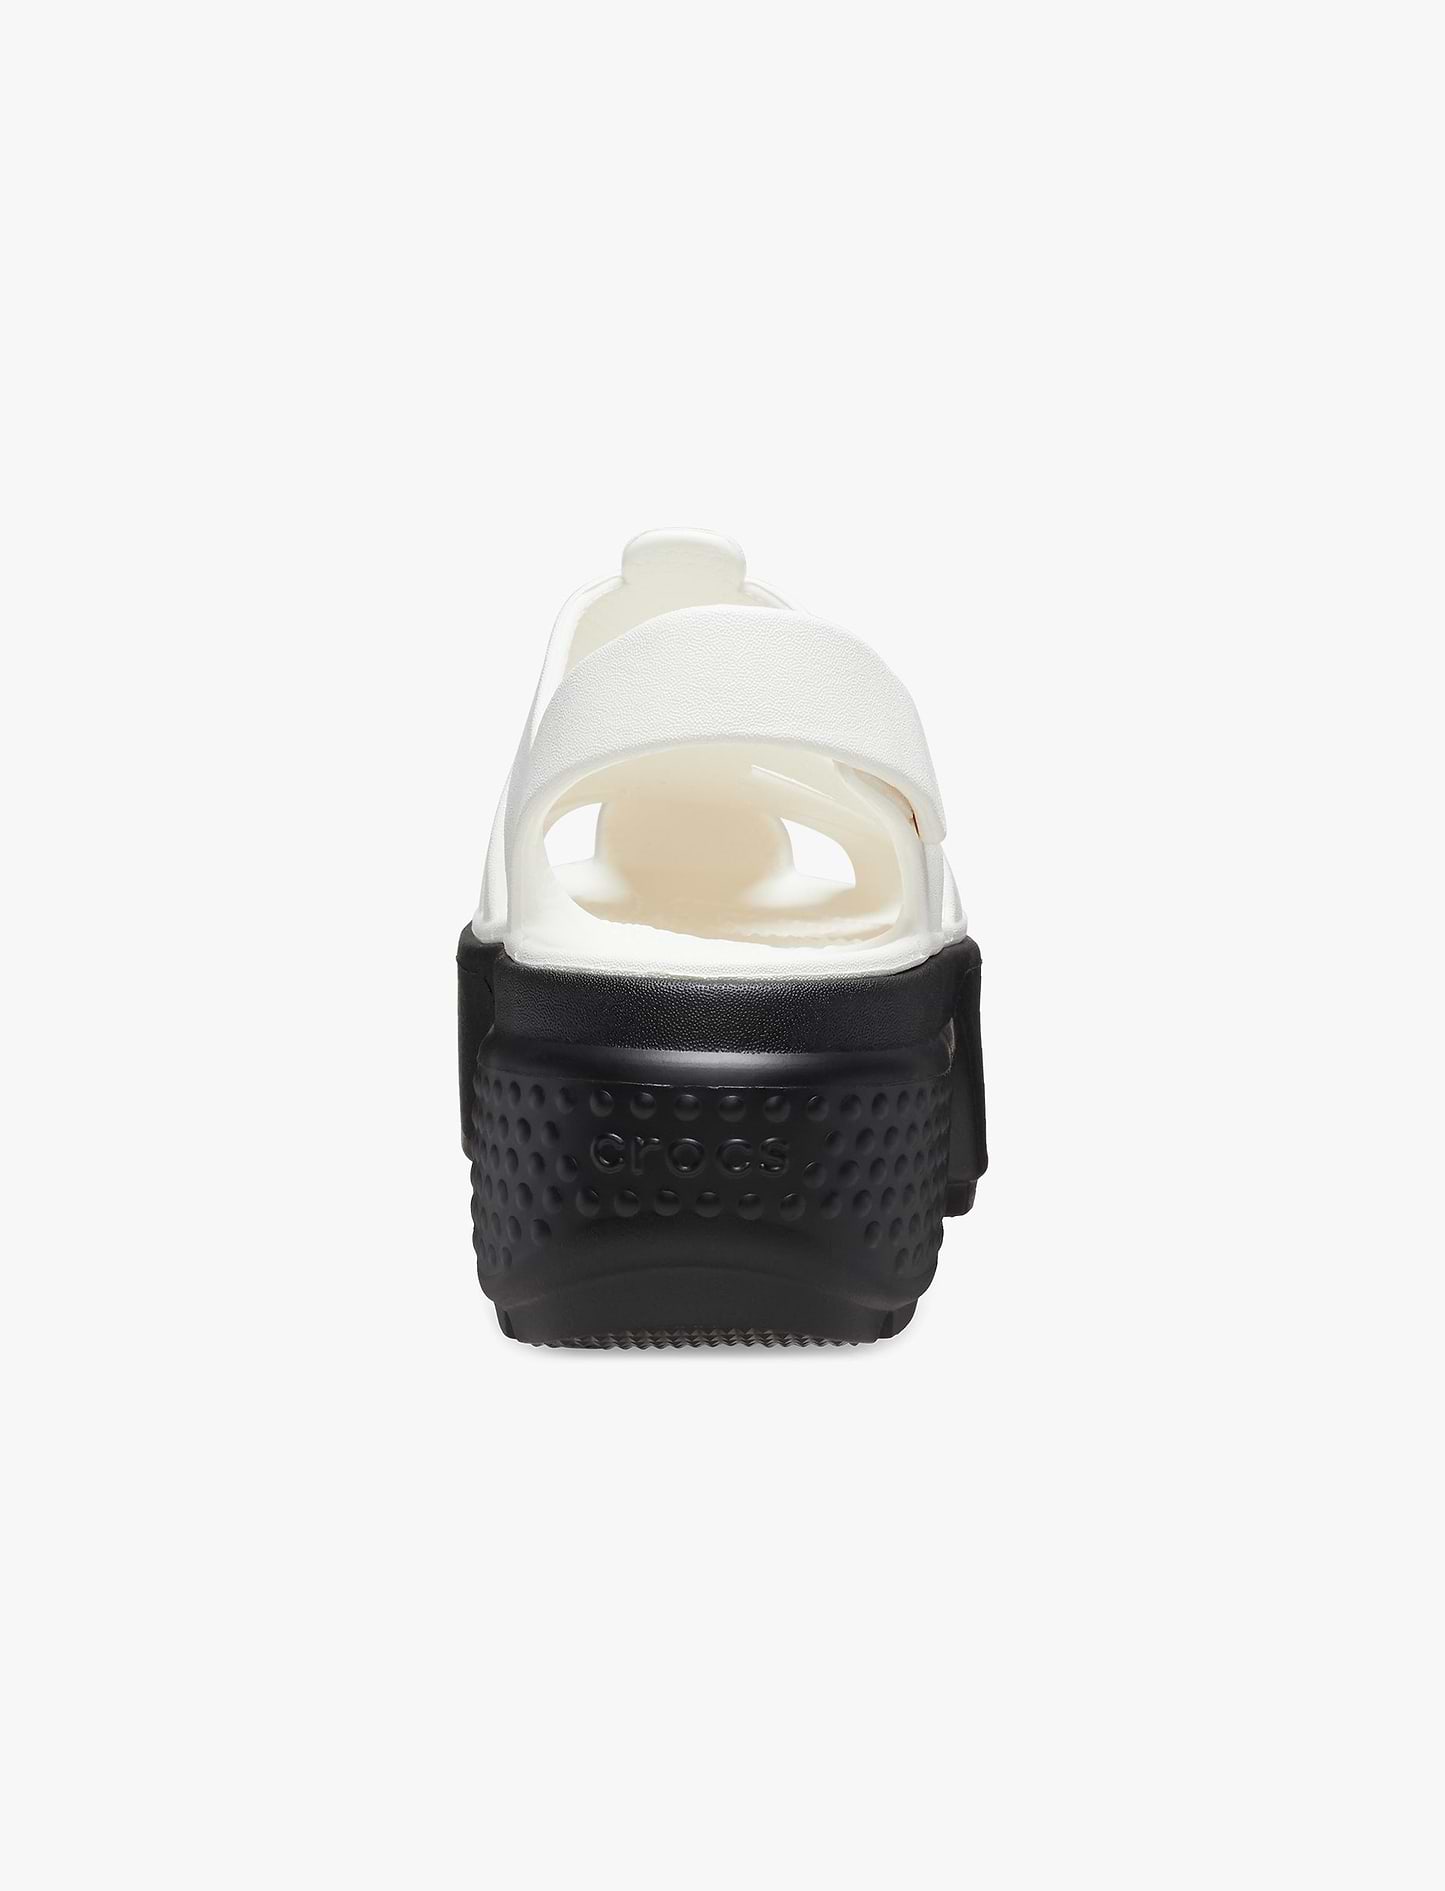 Crocs Stomp Fisherman Sandal - סנדלי פלטפורמה קרוקס לנשים בצבע לבן/שחור